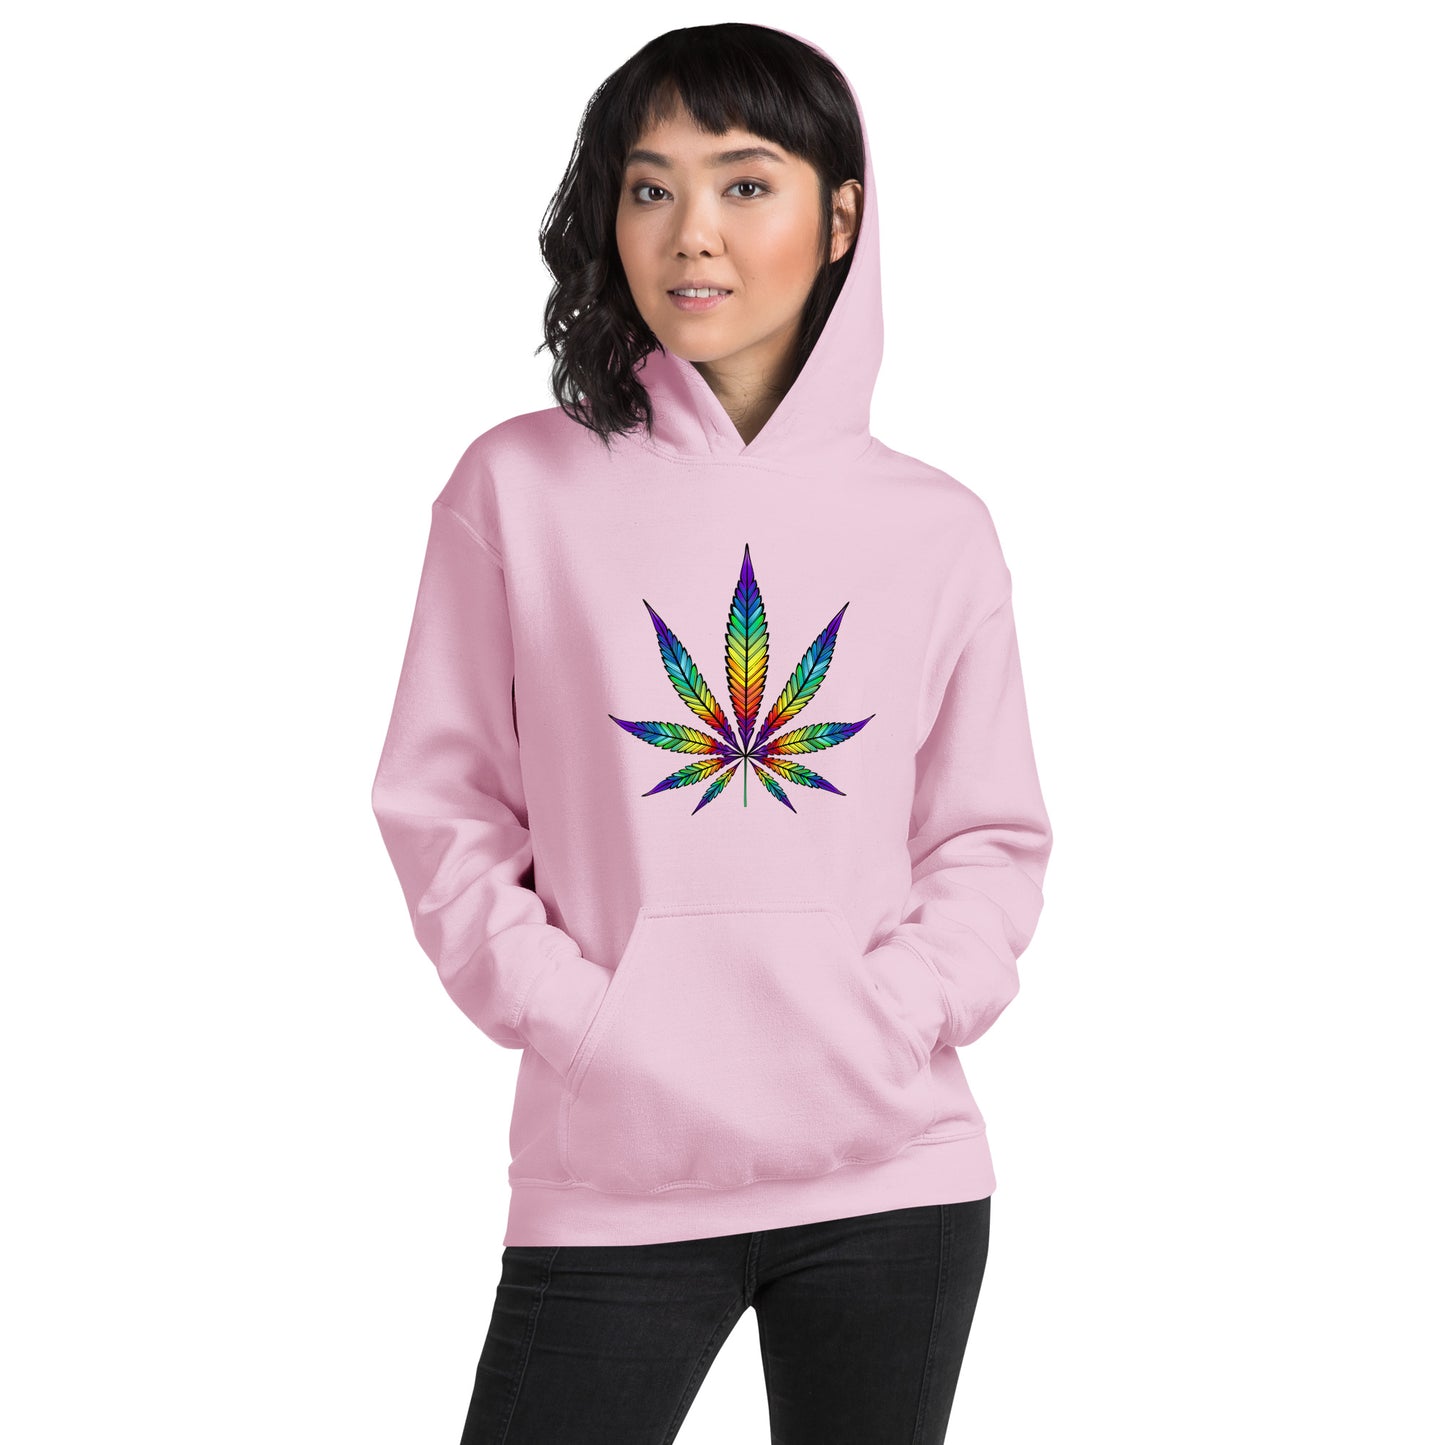 Rainbow Leaf Rep Your State of Mind Unisex Hoodie Cannabis Marijuana Pot Weed Advocacy